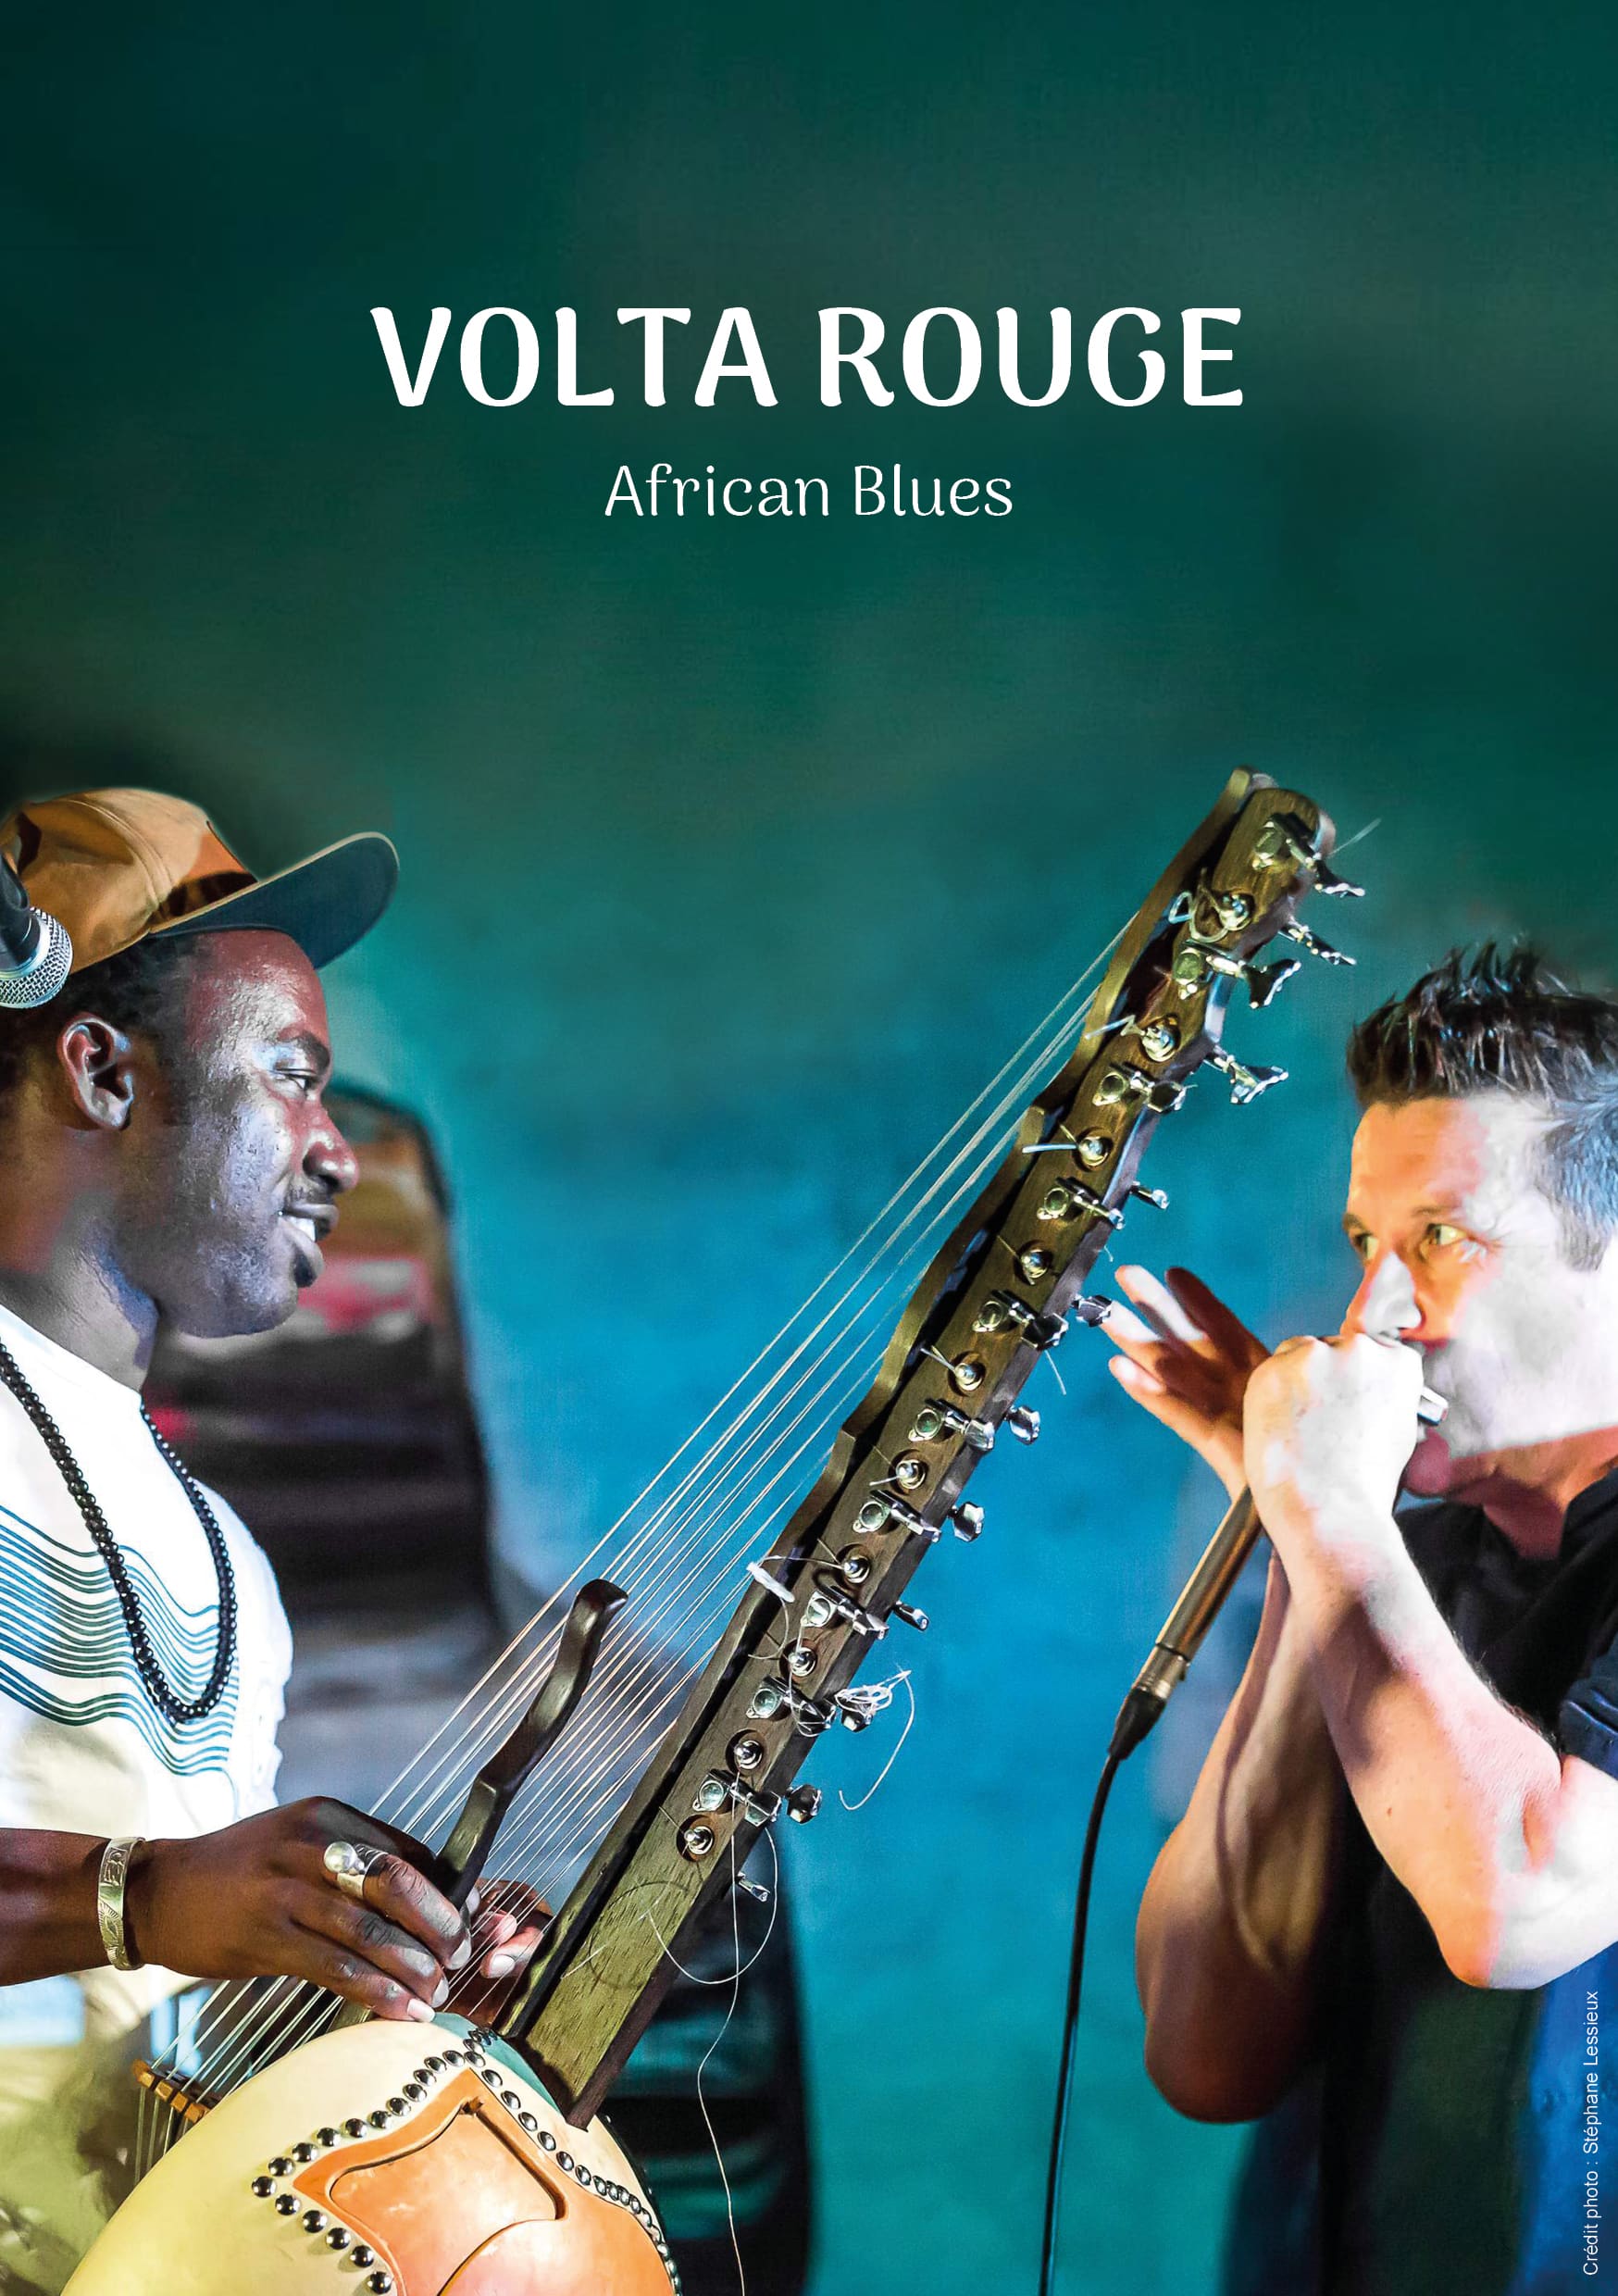 Volta rouge - African blues